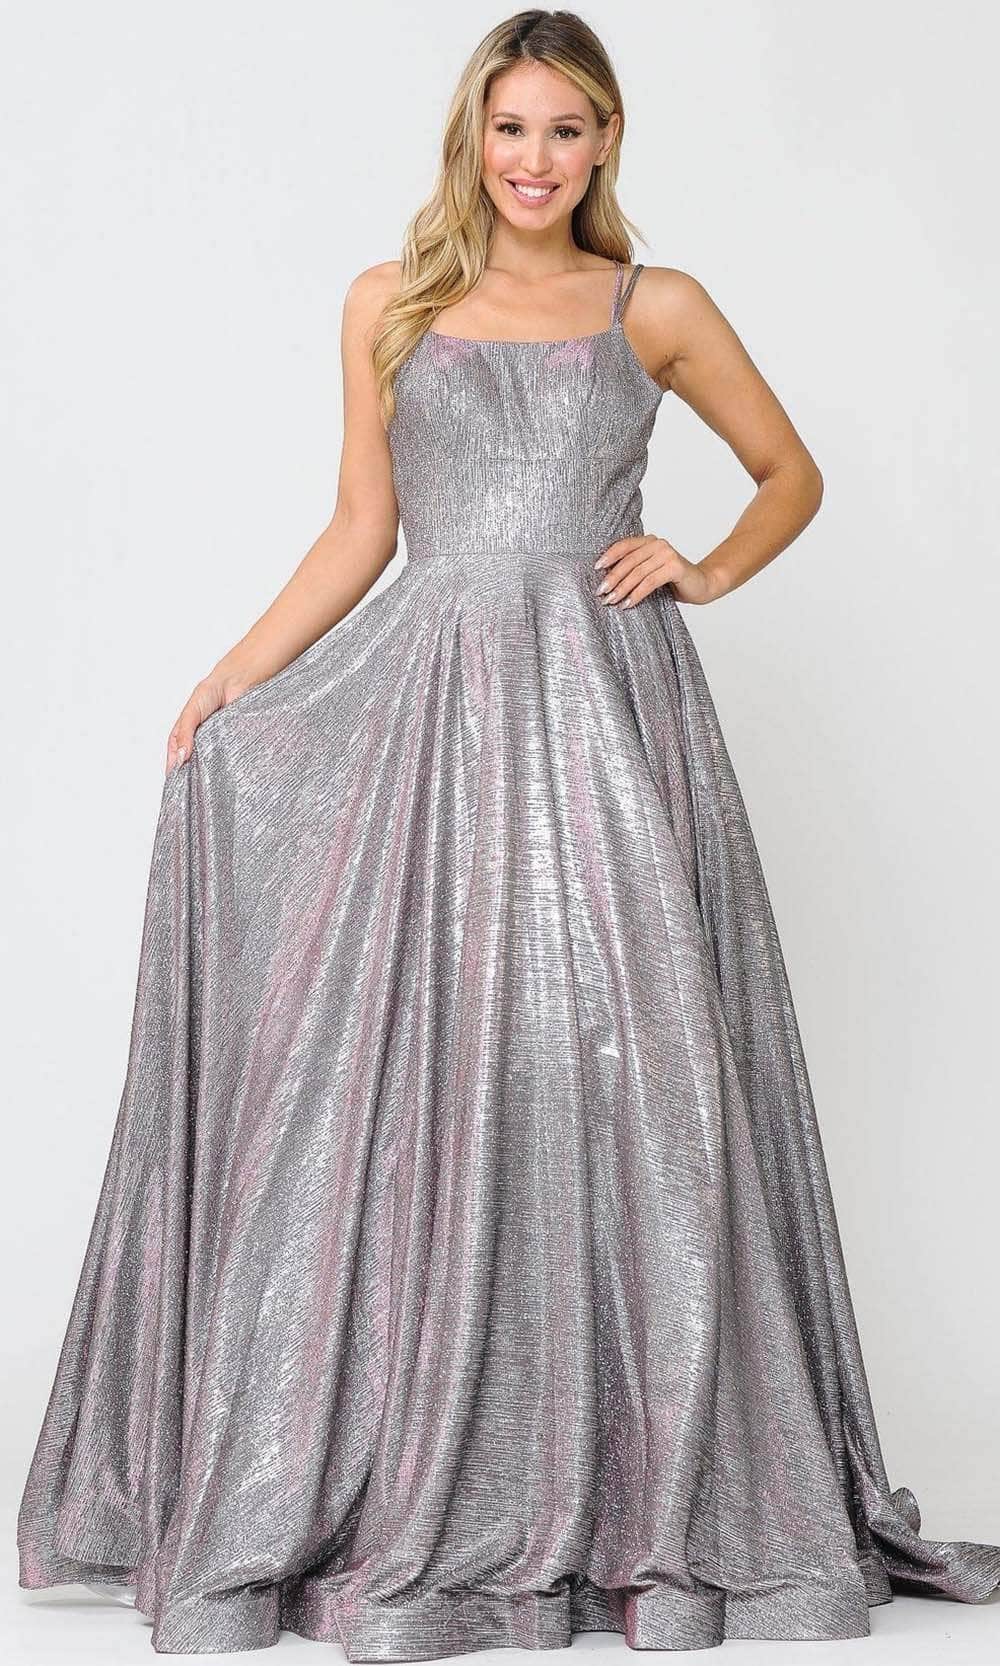 Image of Poly USA 8716 - Strappy Back Glitter A-Line Prom Dress